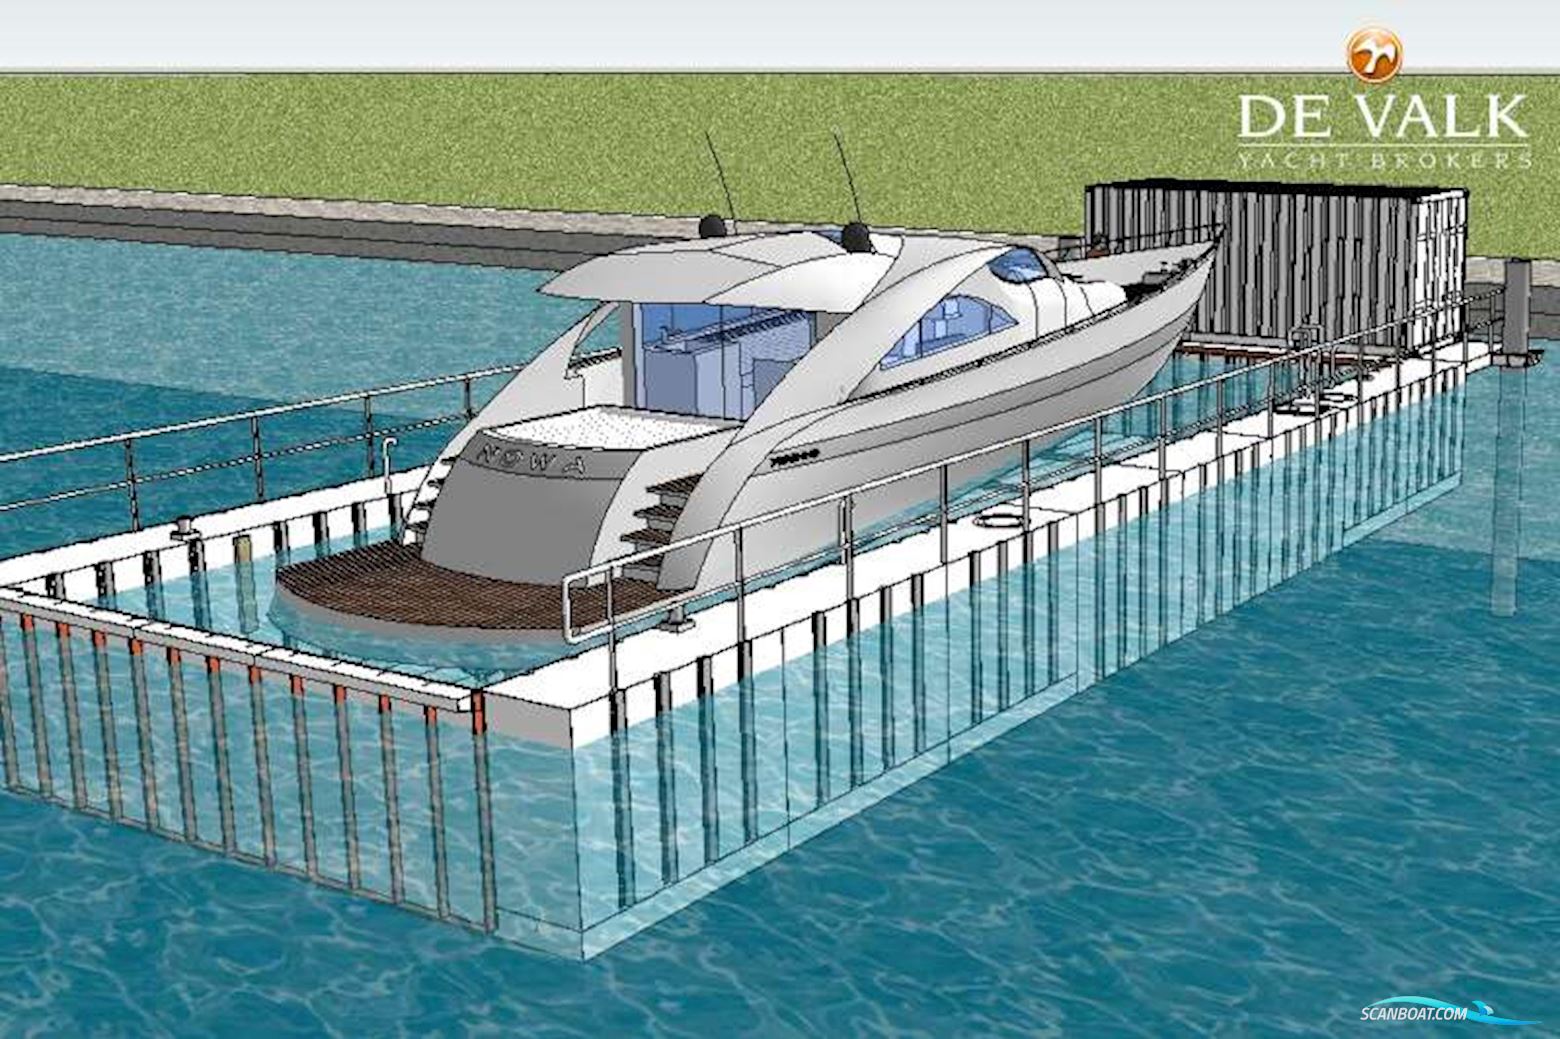 Floating Dock Motor boat 2020, with No Engine engine, The Netherlands